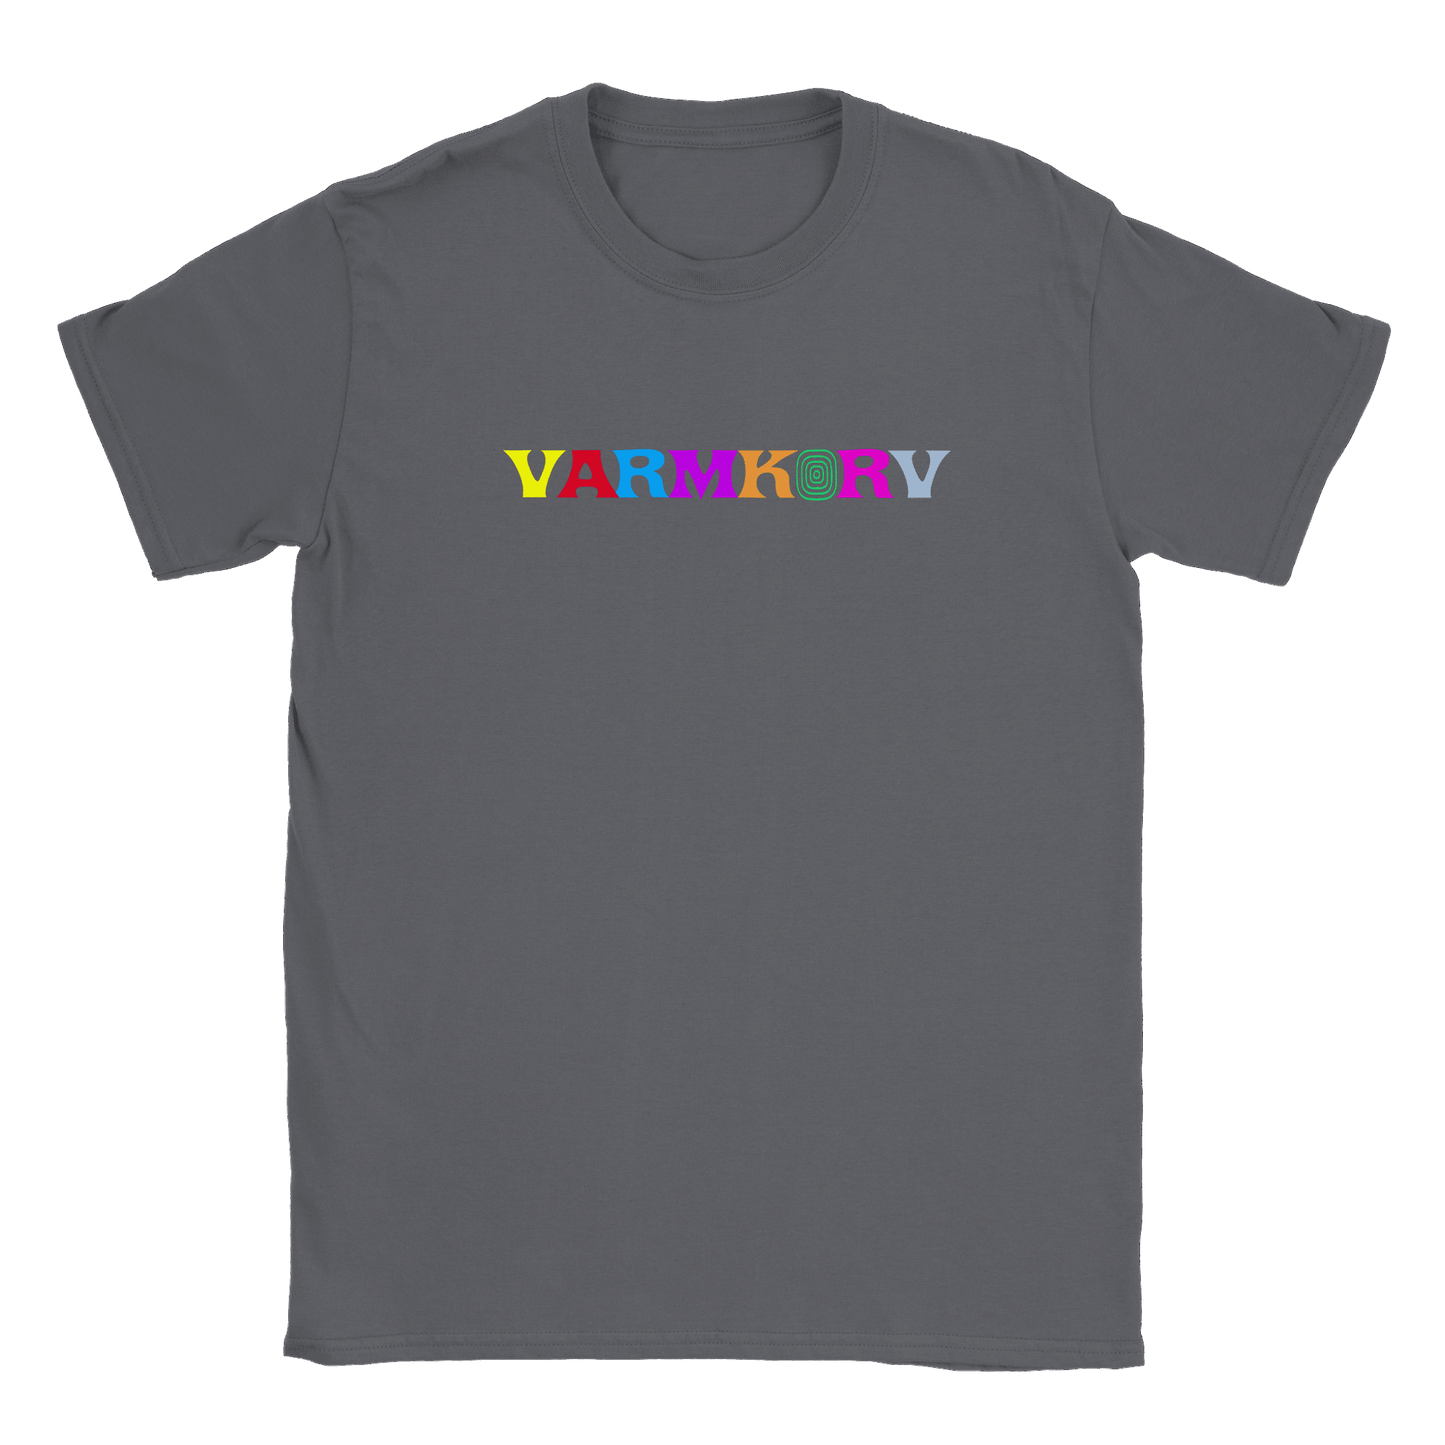 Varmkorv - T-shirt Charcoal